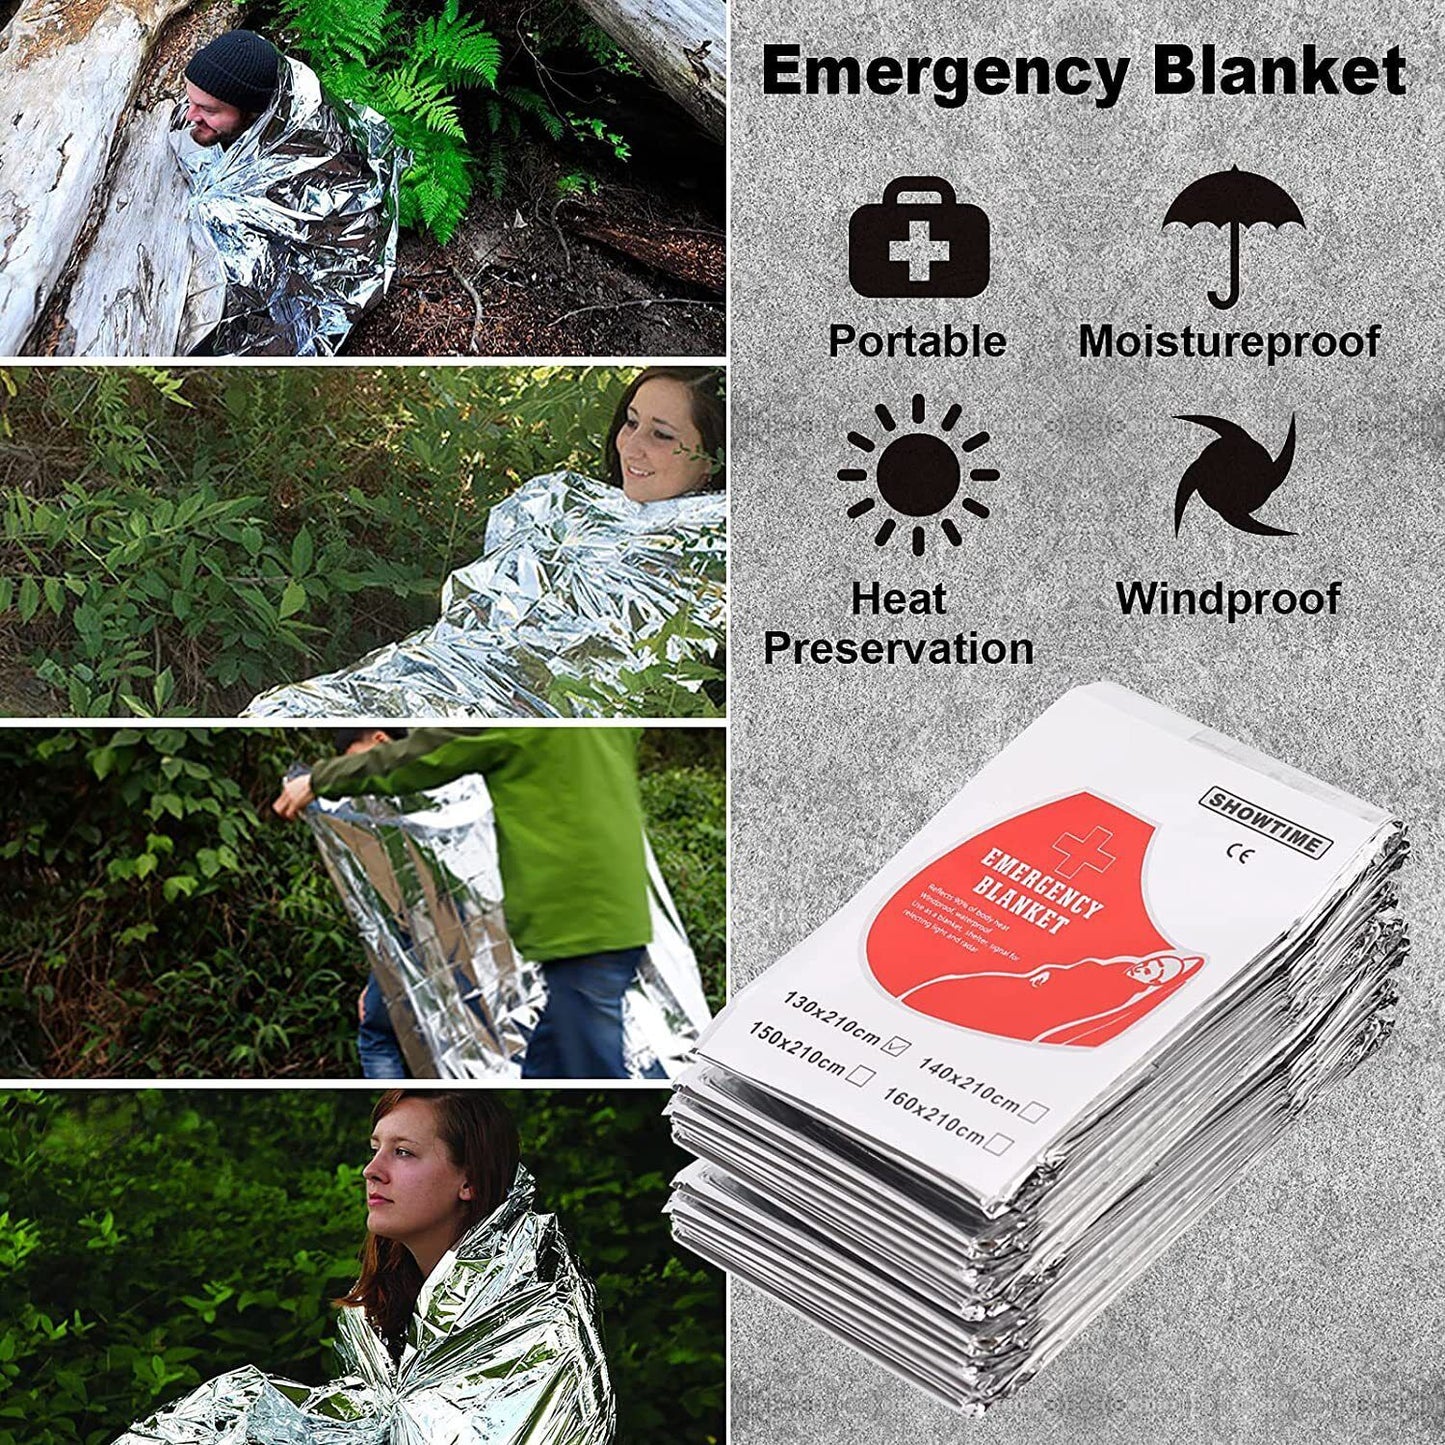 Elite 14in1 Outdoor Emergency Survival Gear Kit Camping Hiking Survival Gear Tools Kit Survival Gear